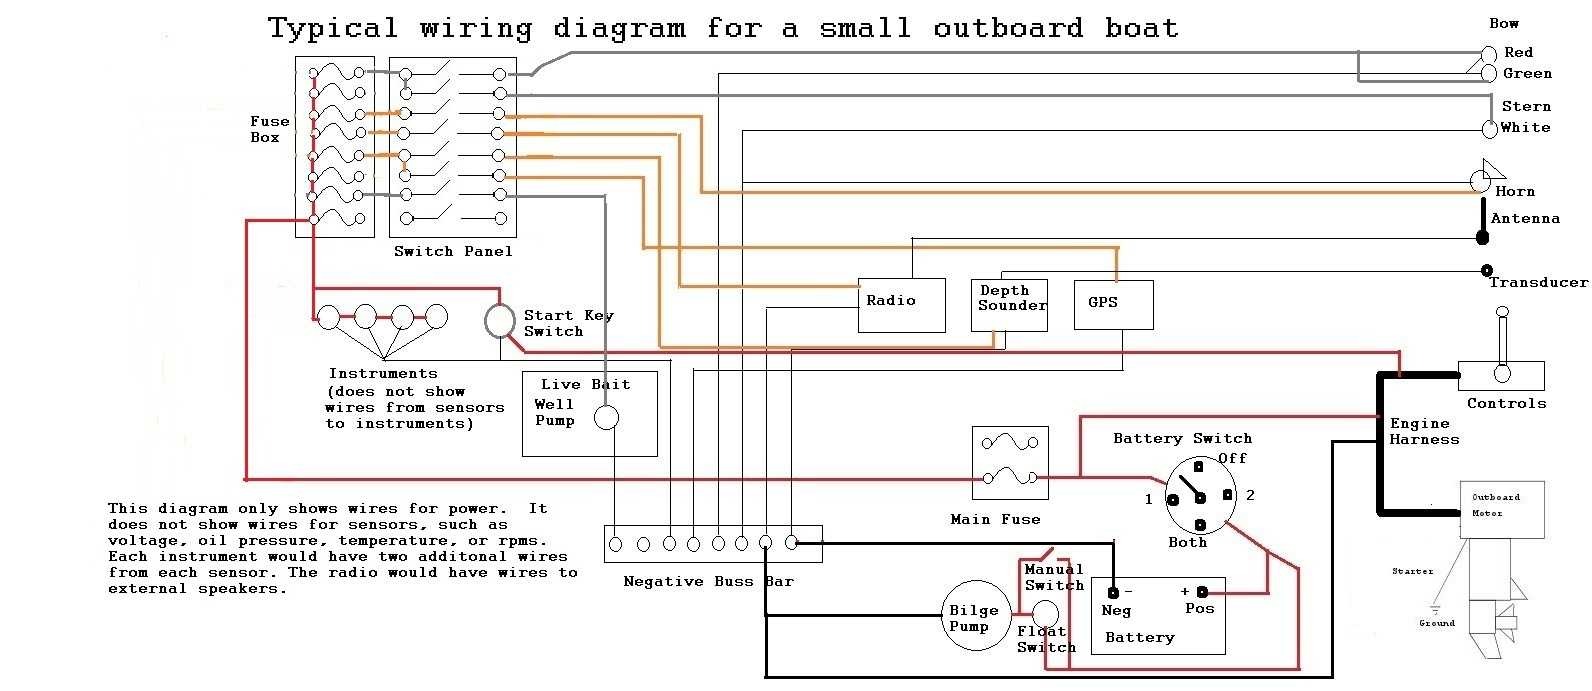 Installing Boat Wiring Harness | Wiring Diagram - Pontoon Boat Wiring Diagram